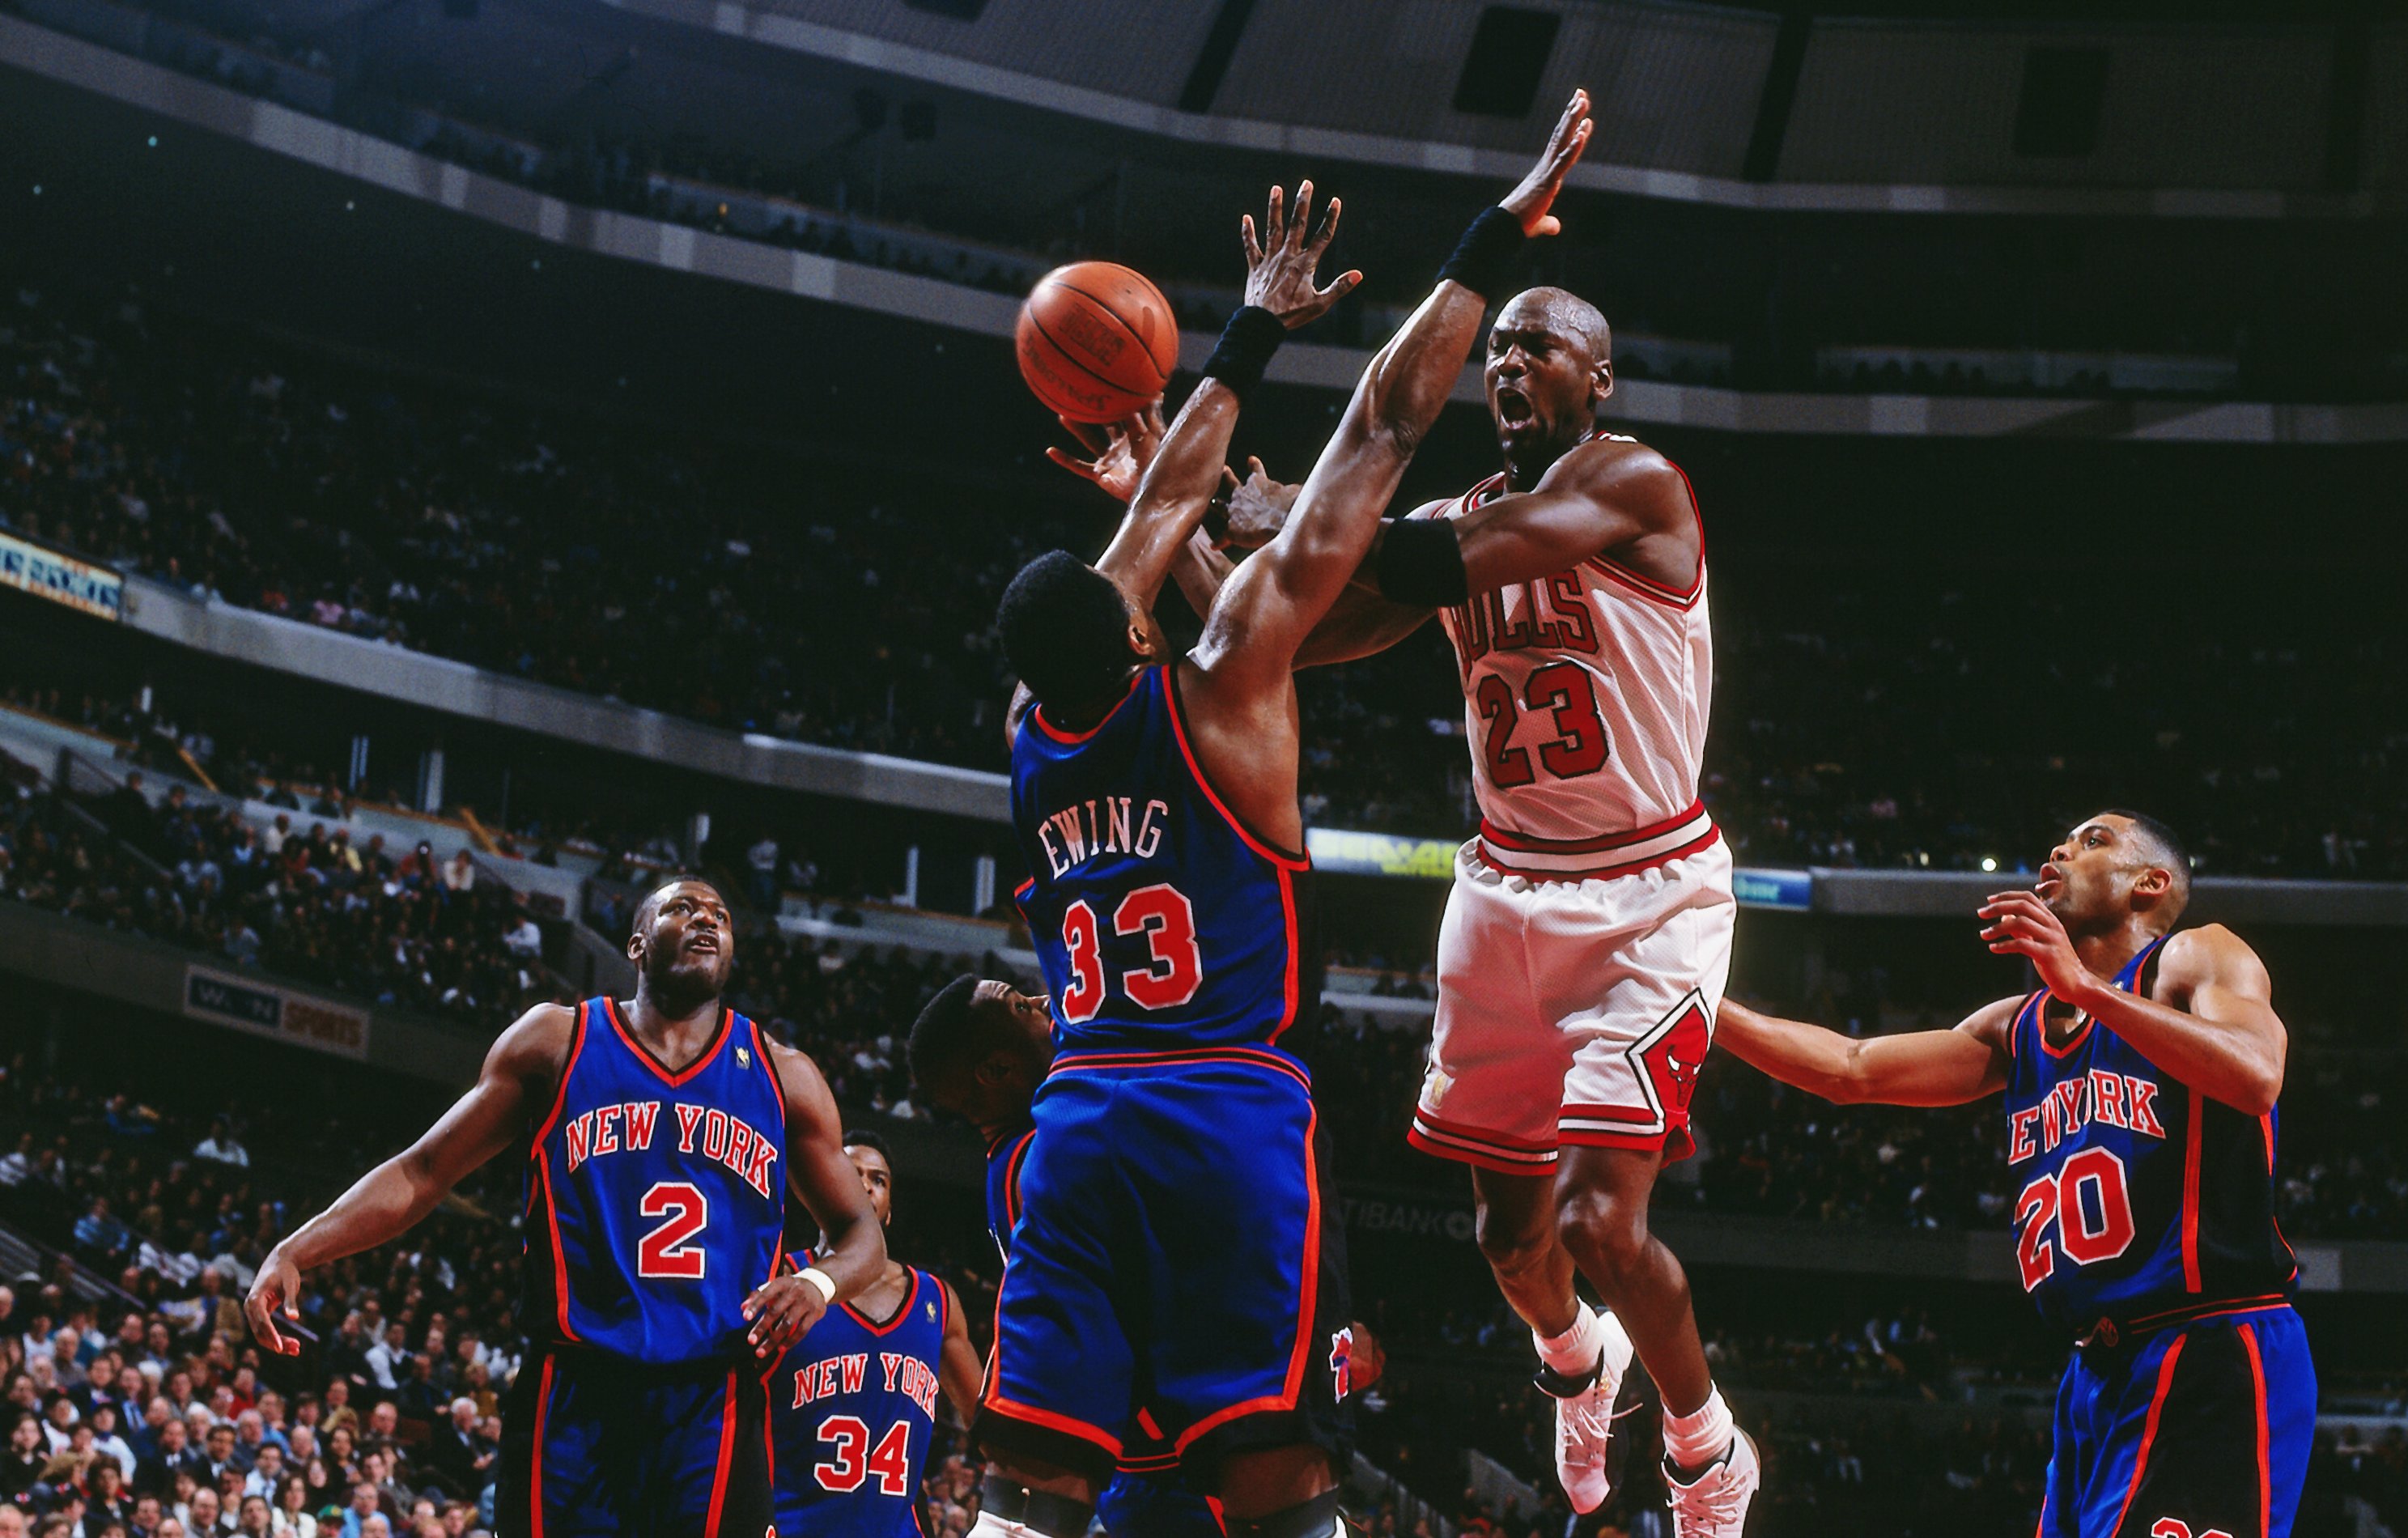 1986 Chicago Bulls vs. Boston Celtics: The Series That Turned Michael  Jordan Into A Star - Fadeaway World